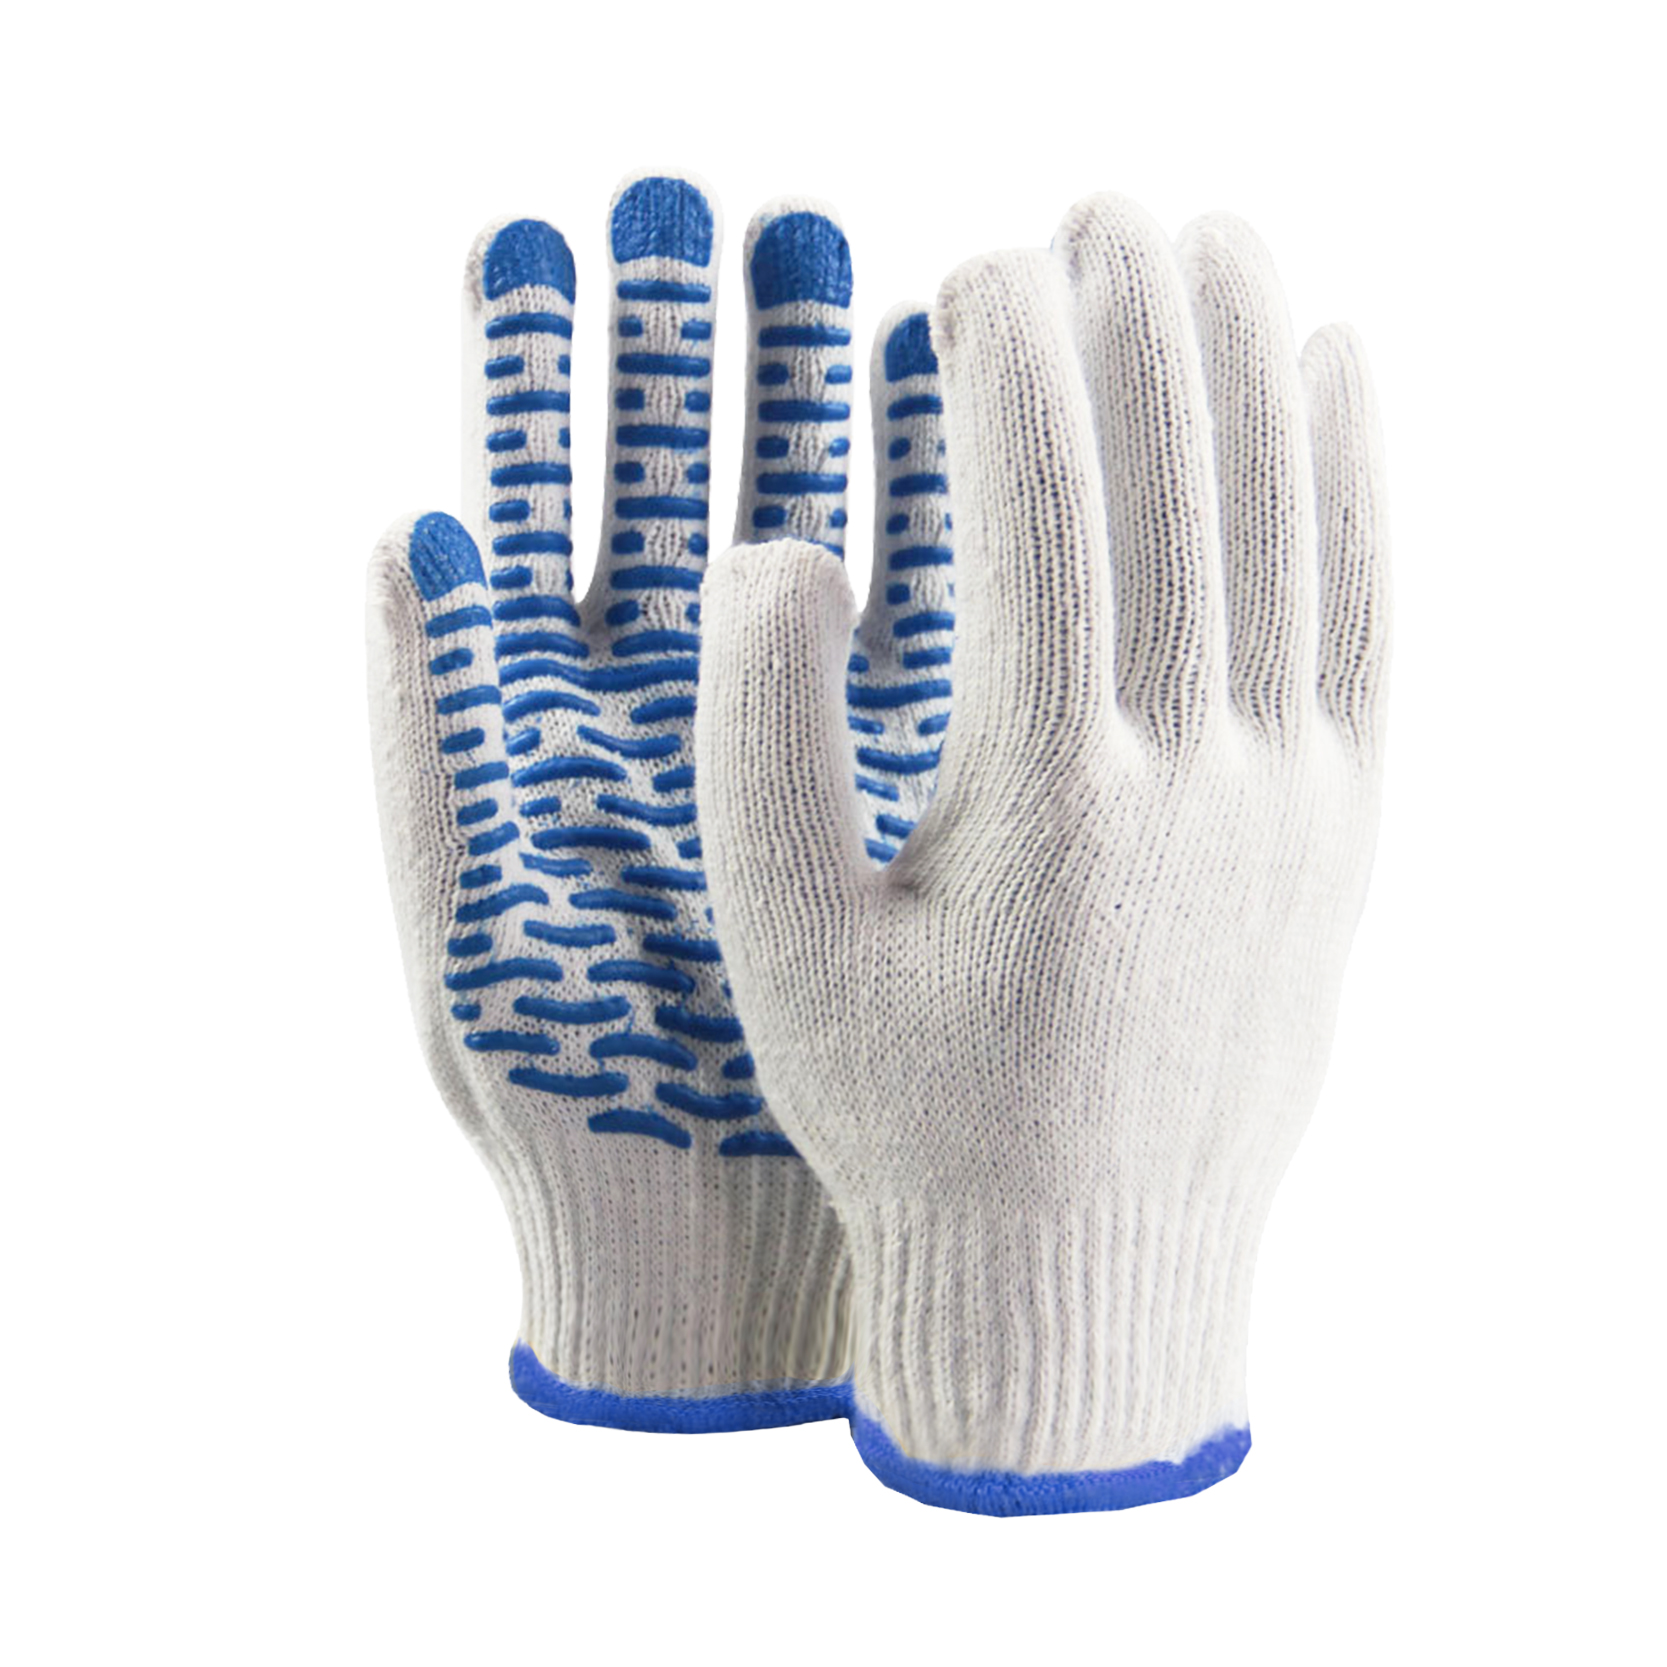 Pvc Dotted Natural White Cotton Glove Cotton String Knit Glove